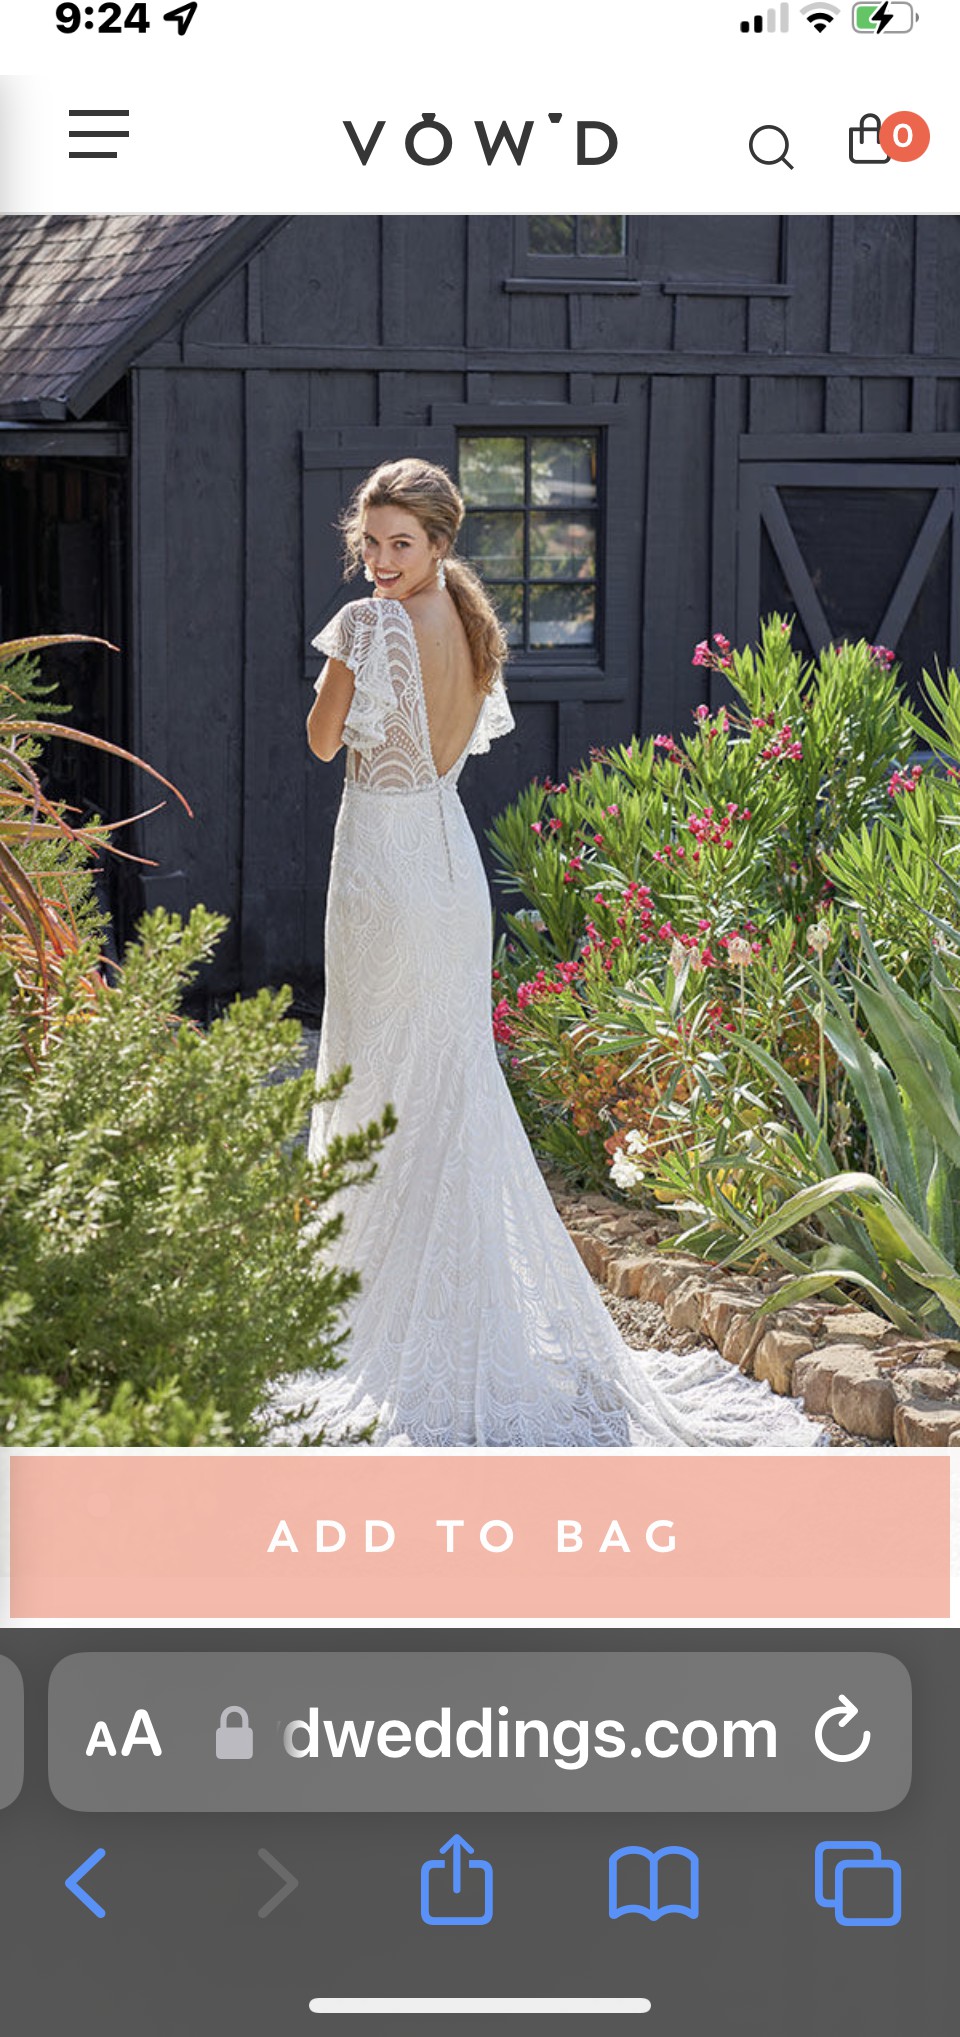 Vow’d Forte VD020 New Wedding Dress Save 4% - Stillwhite